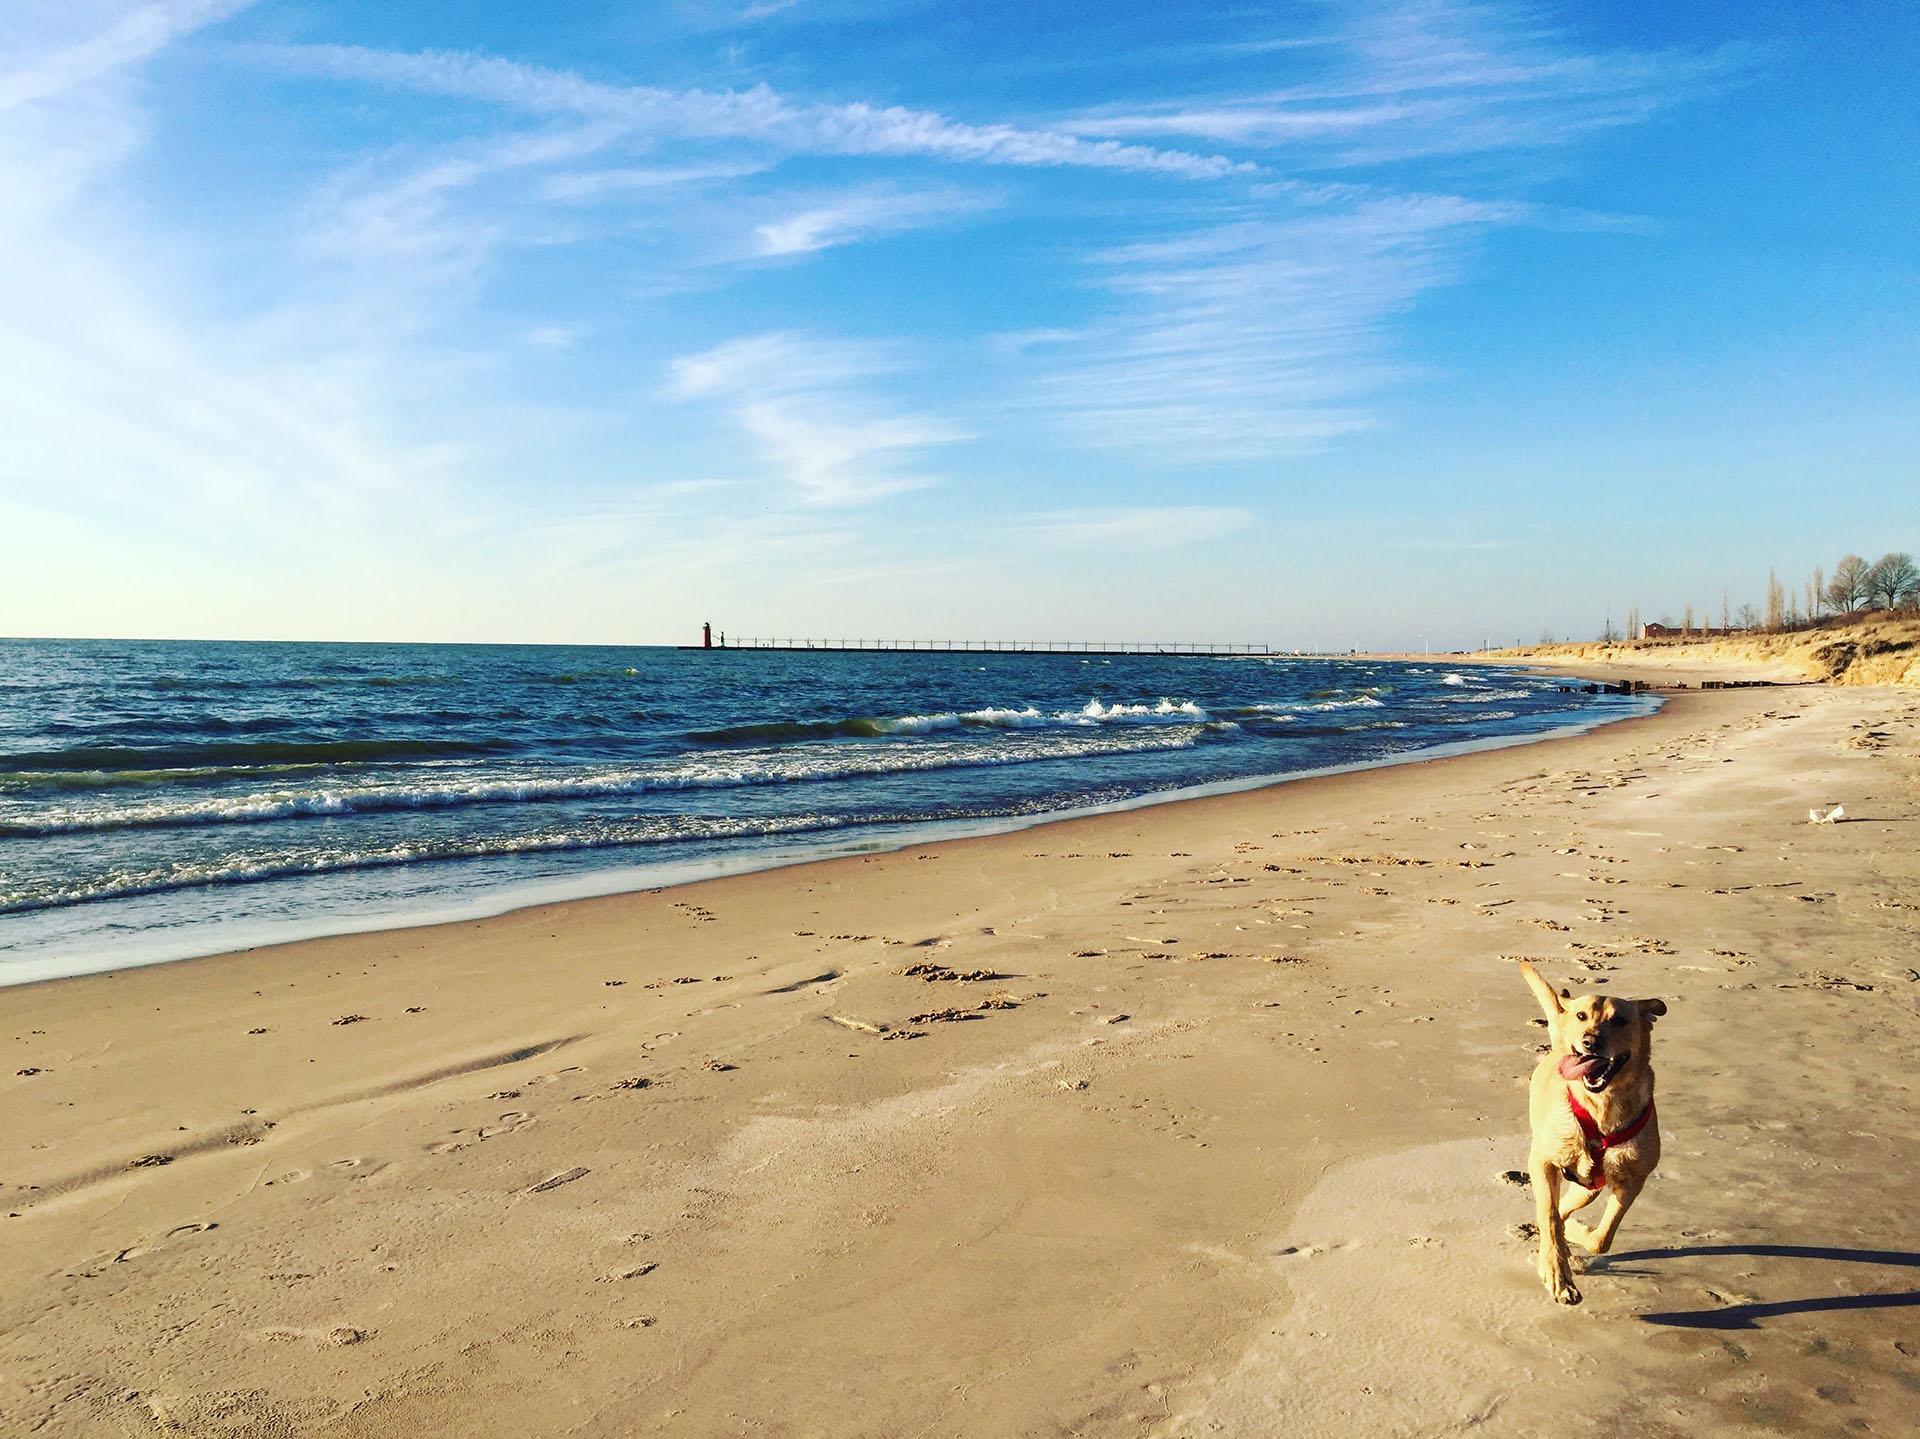 A dog running on the beach.